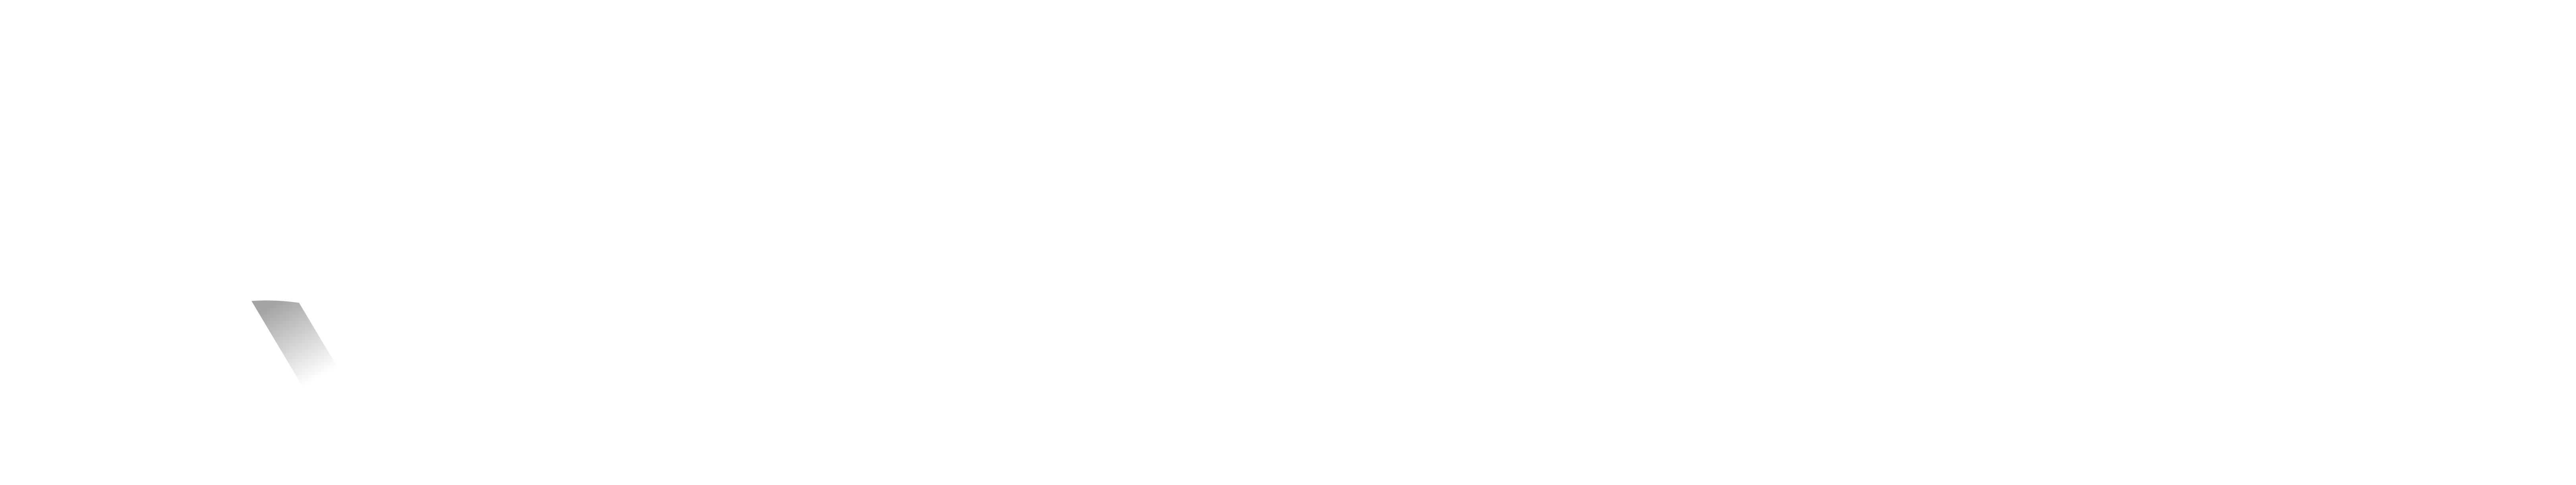 audiocrest-logo-chennai